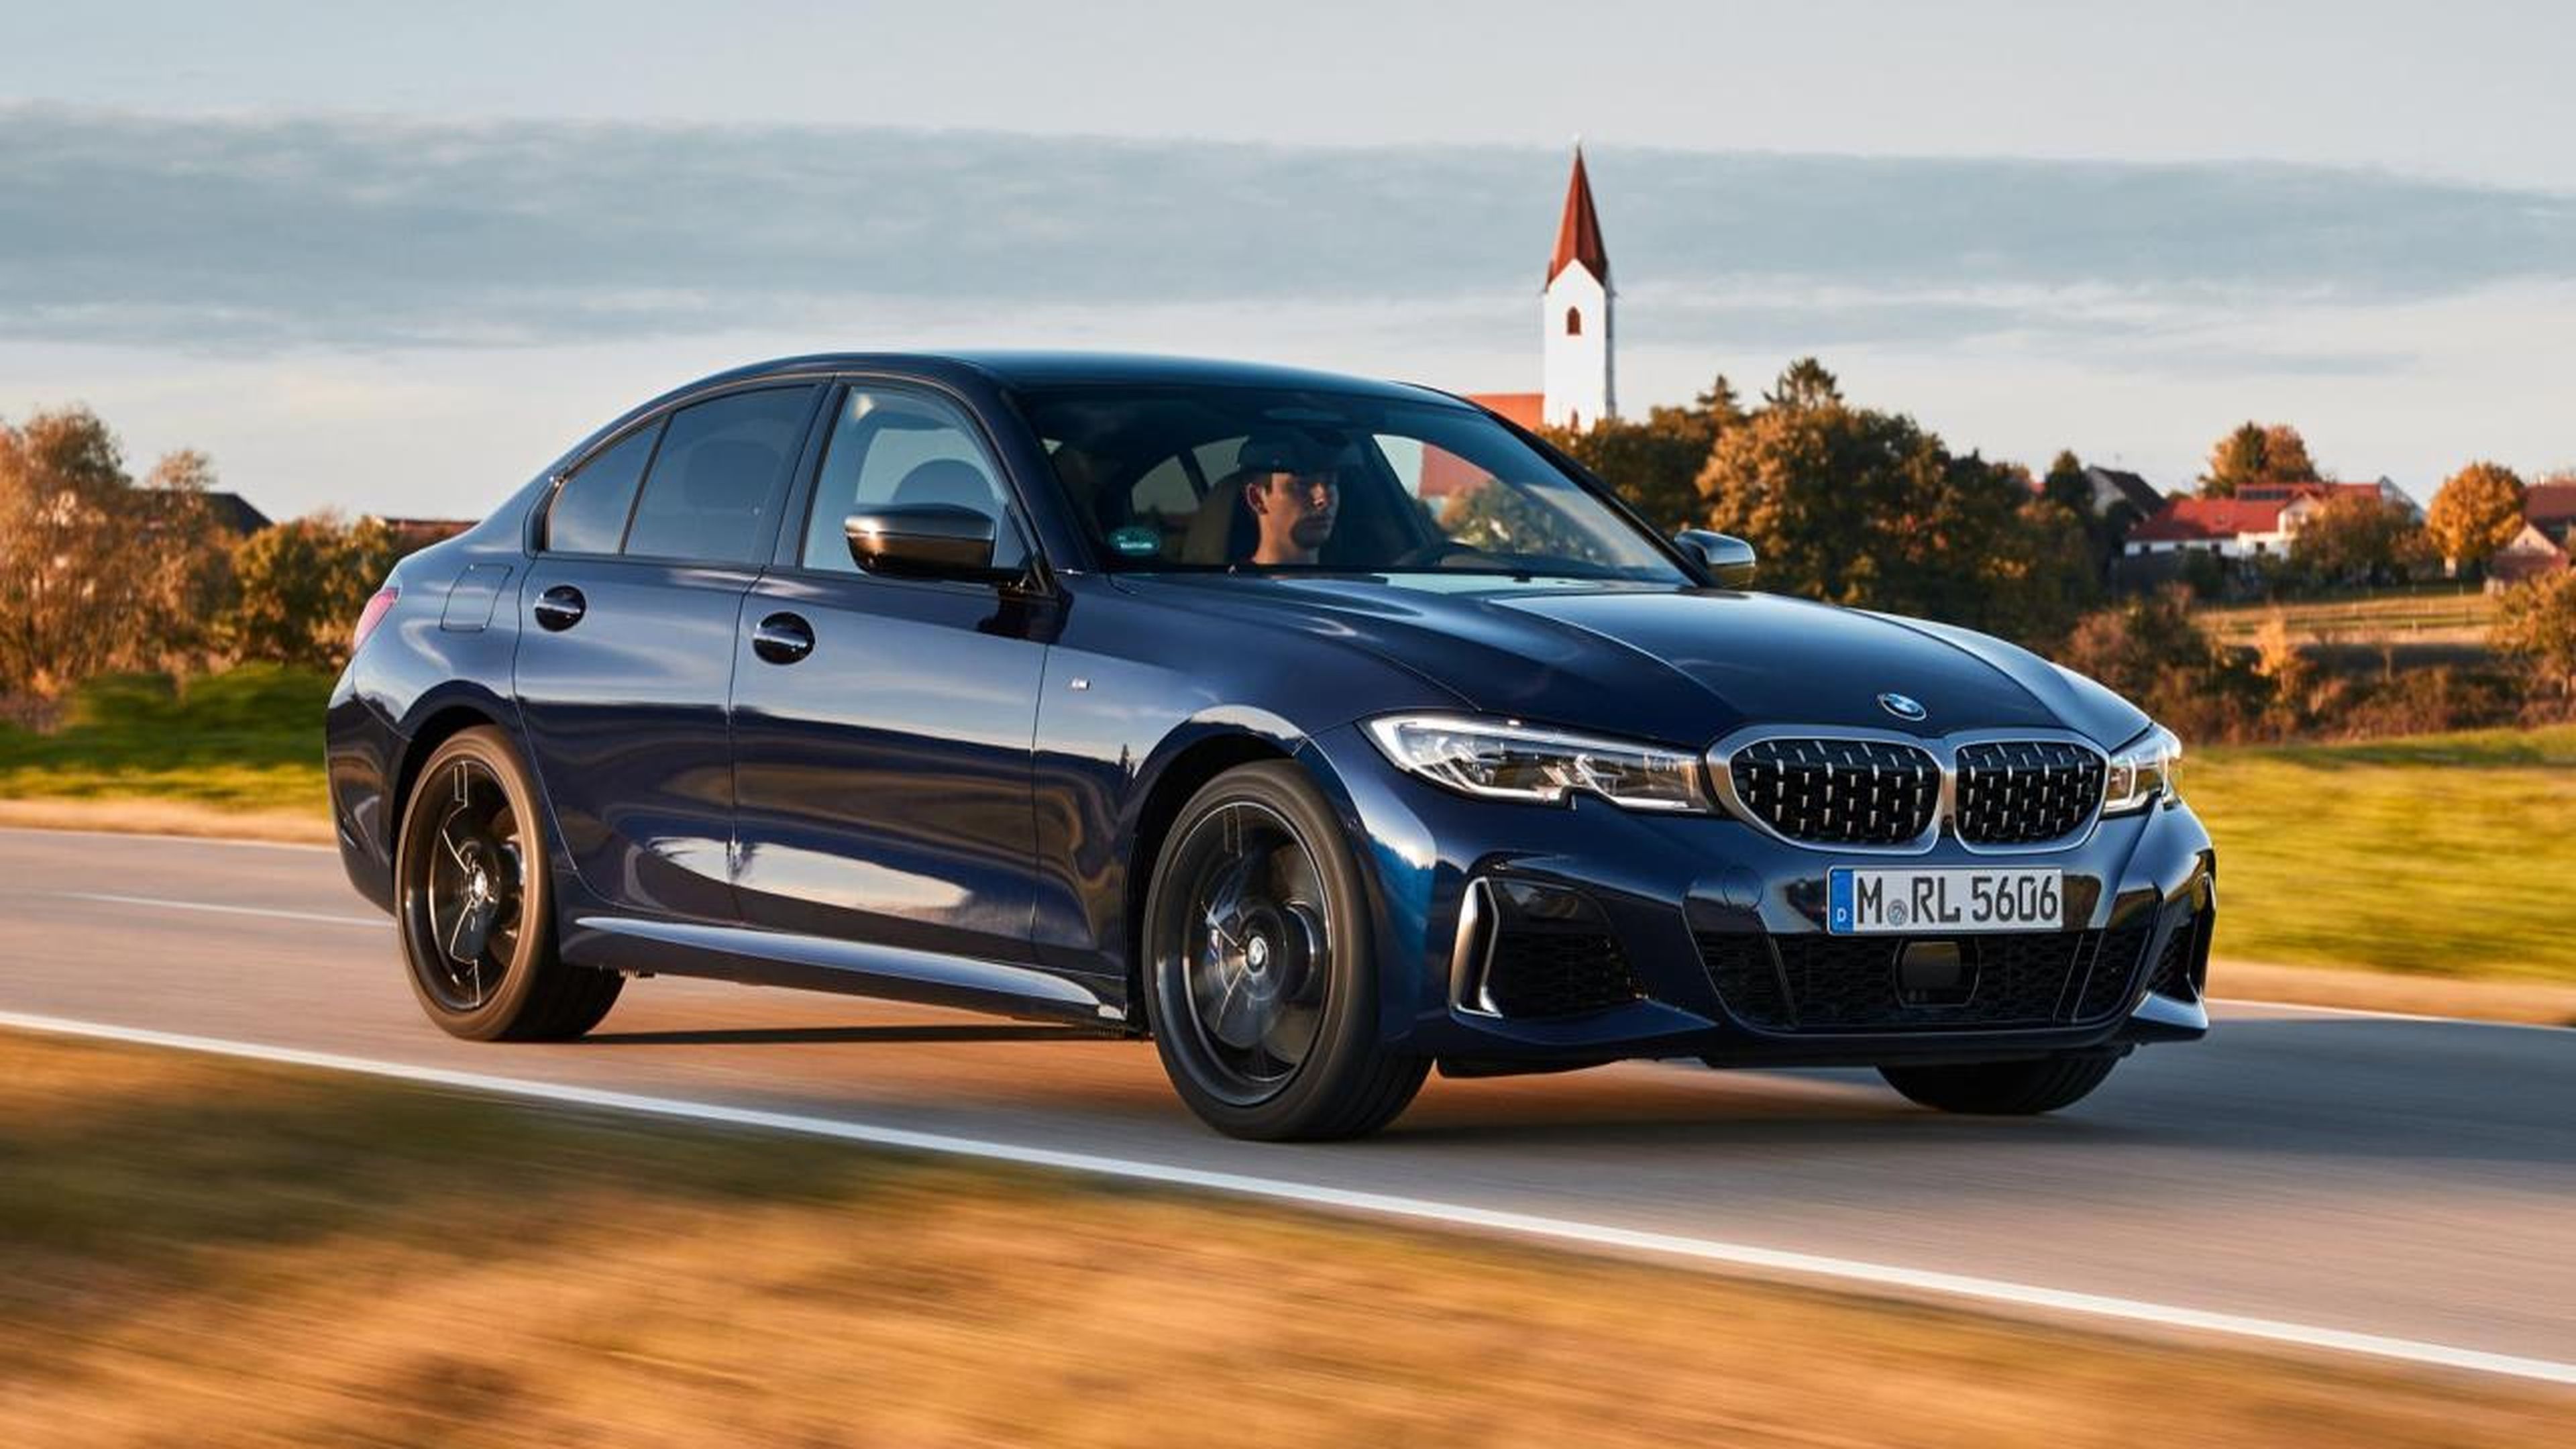 PRUEBA: BMW Serie 3 G20 - Periodismo del Motor